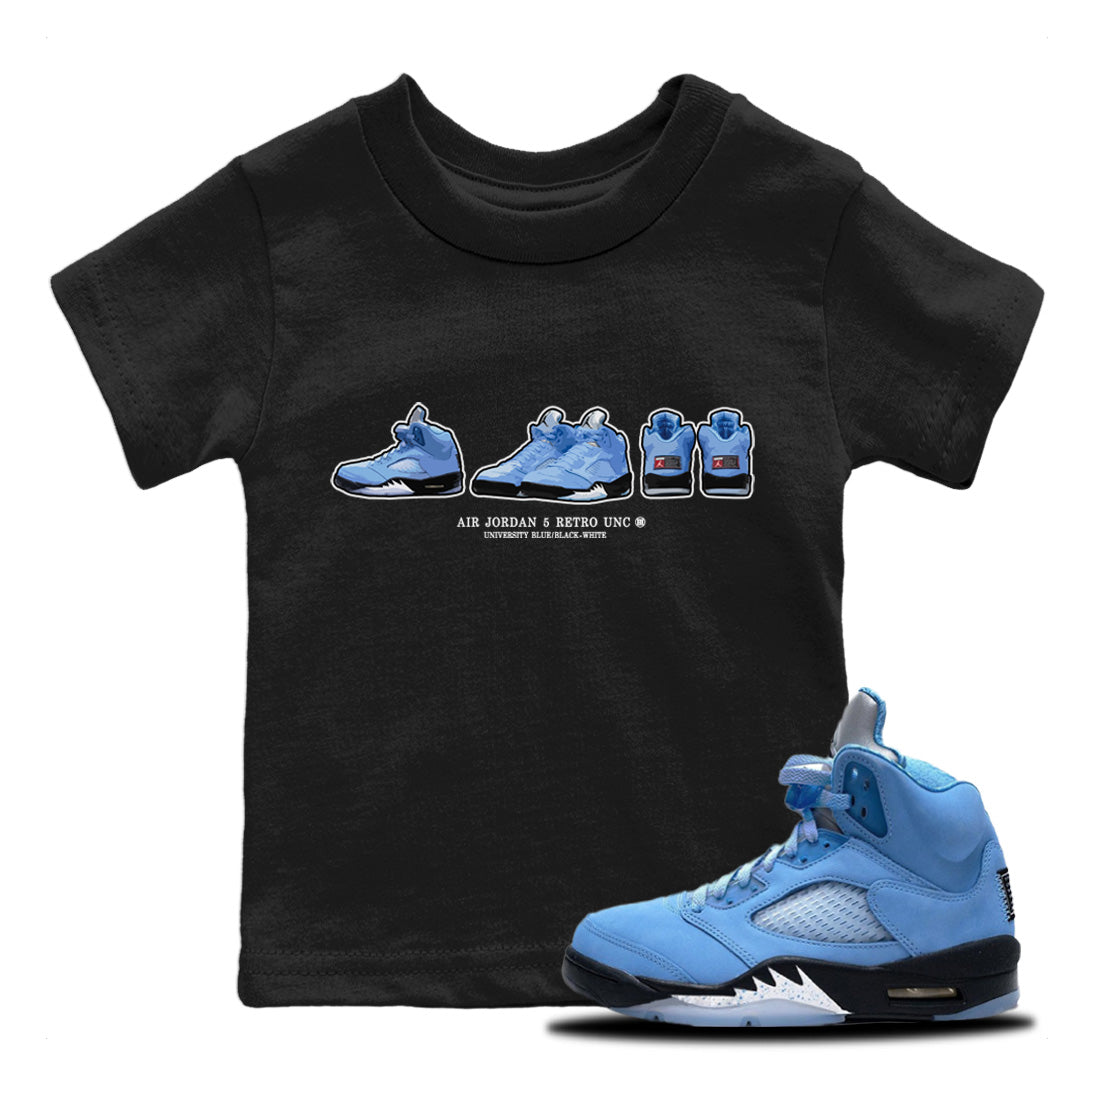 Air Jordan 5 UNC Shirt To Match Jordans Sneaker Prelude Sneaker Tees Air Jordan 5 Retro UNC Drip Gear Zone Sneaker Matching Clothing Kids Shirts Black 1